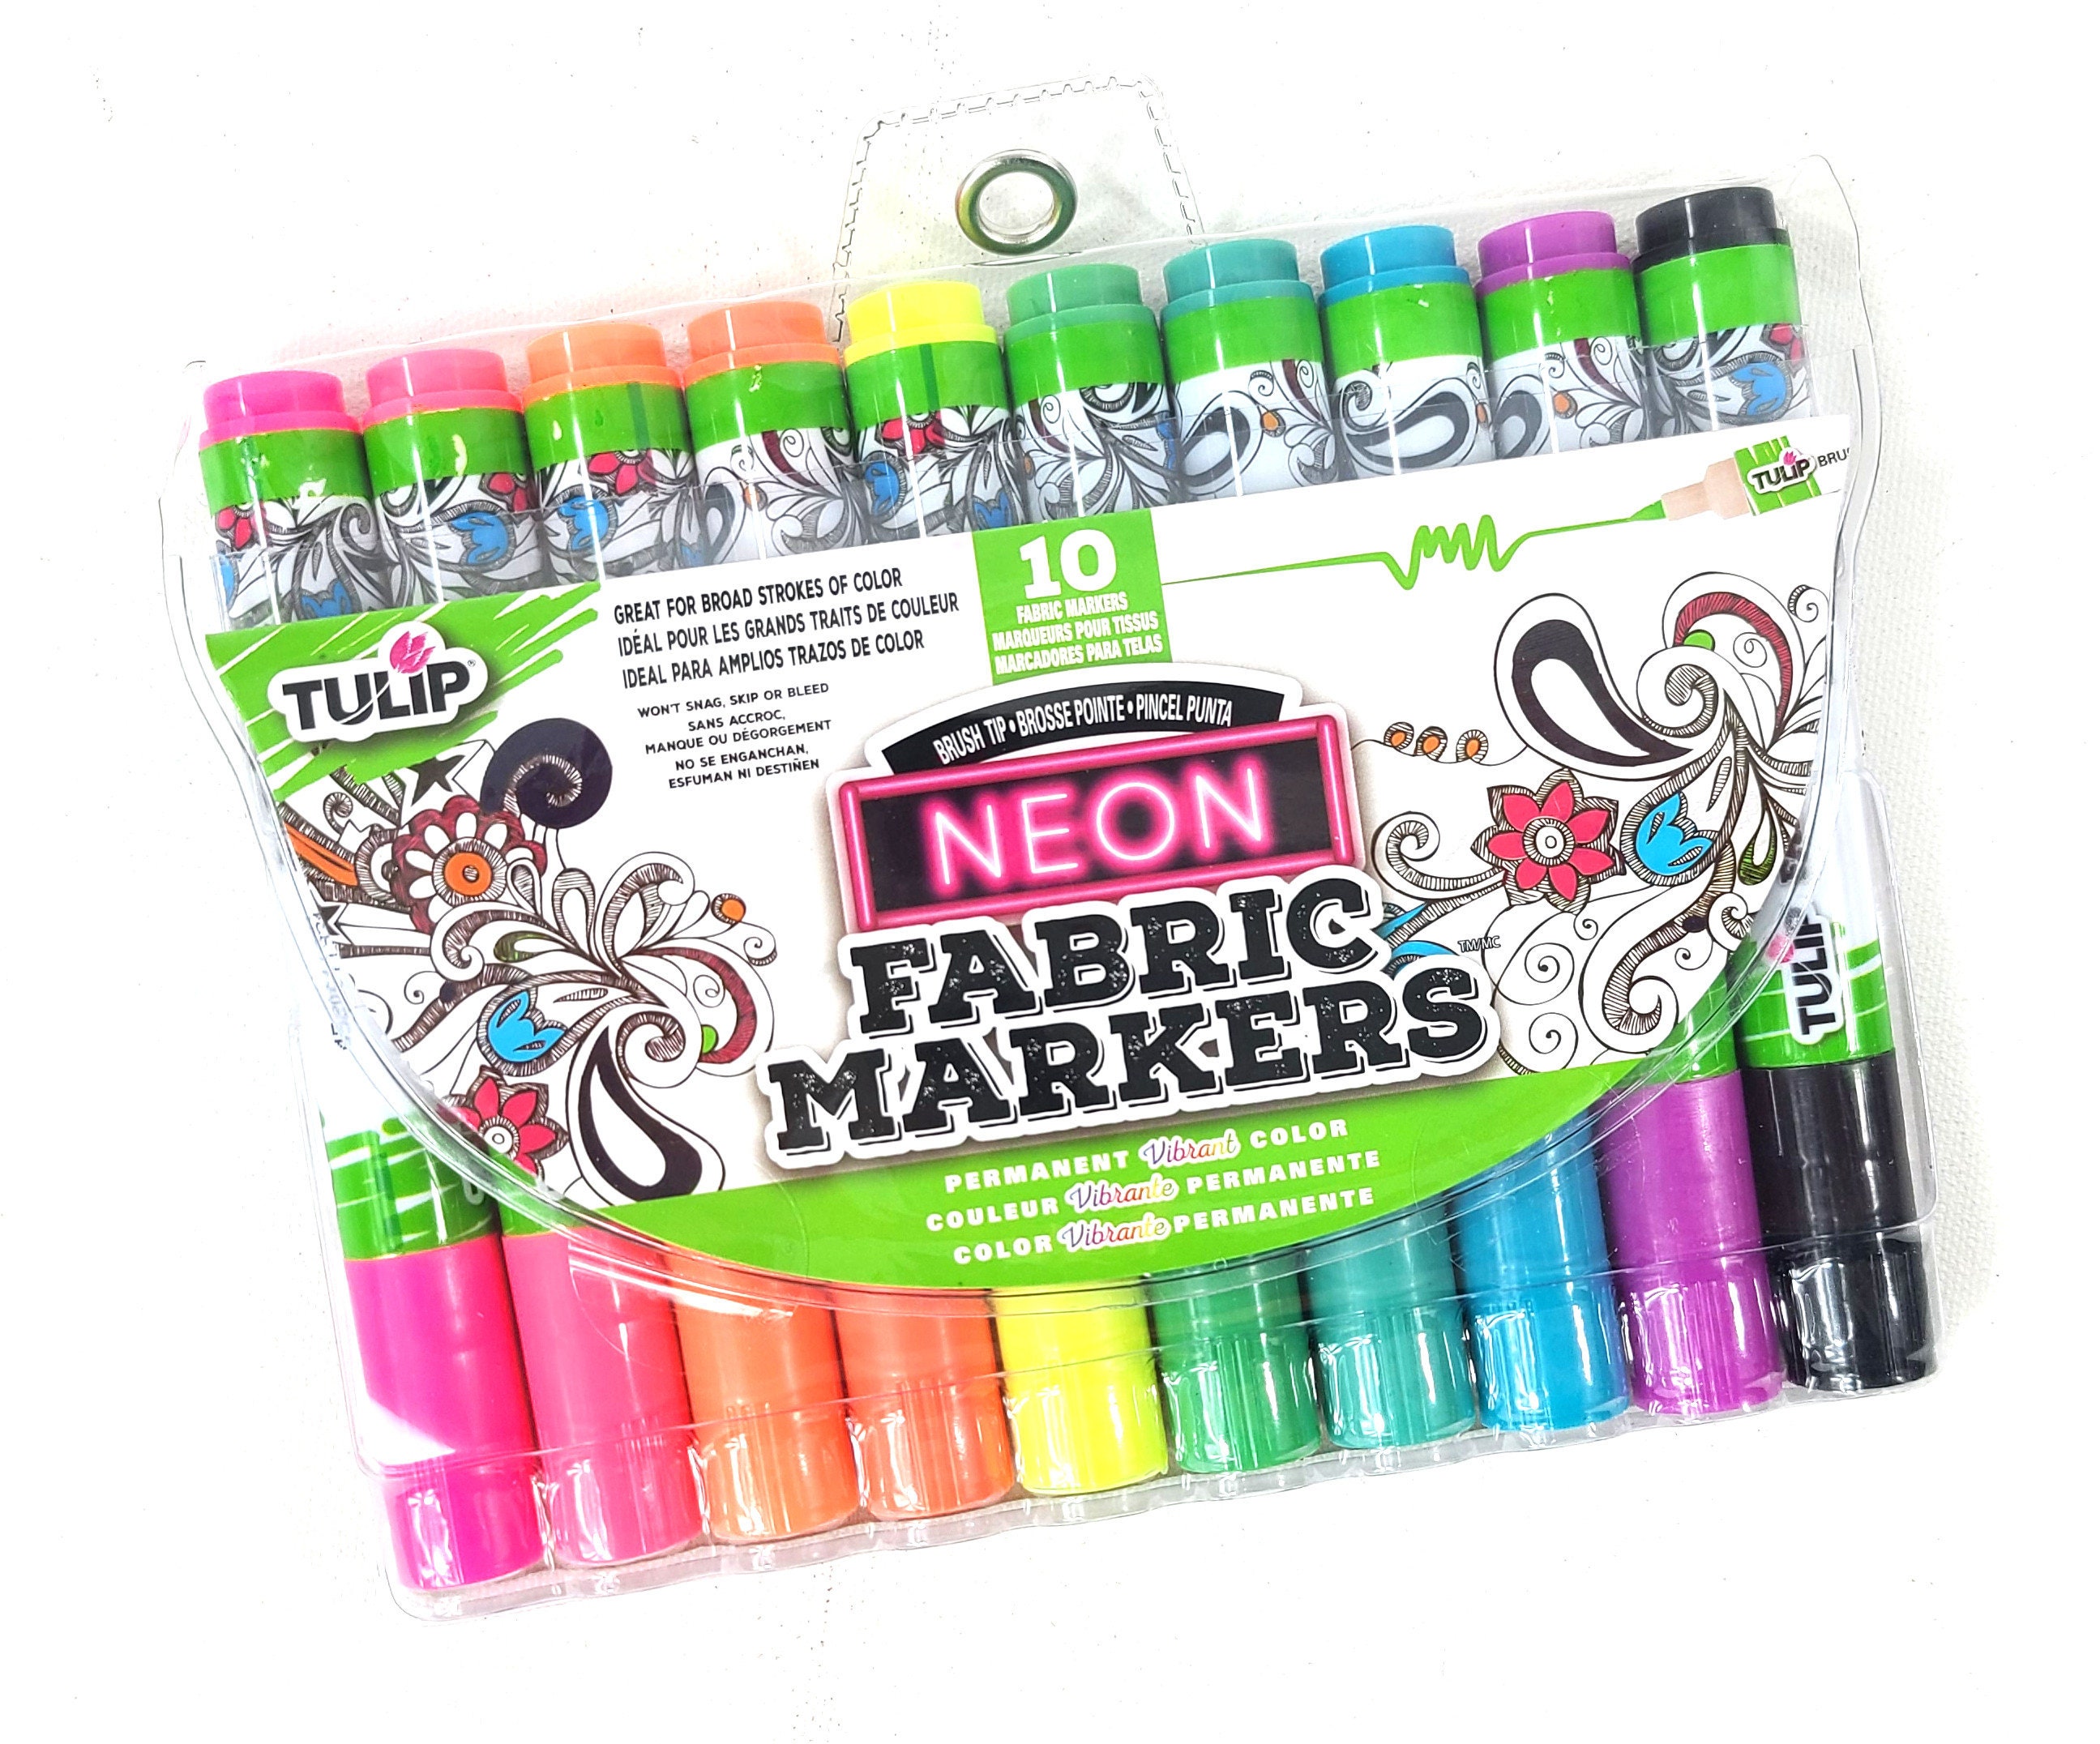 FIXSMITH 24/48 Colors Journaling Pens, Dual Tip Brush Pens Art